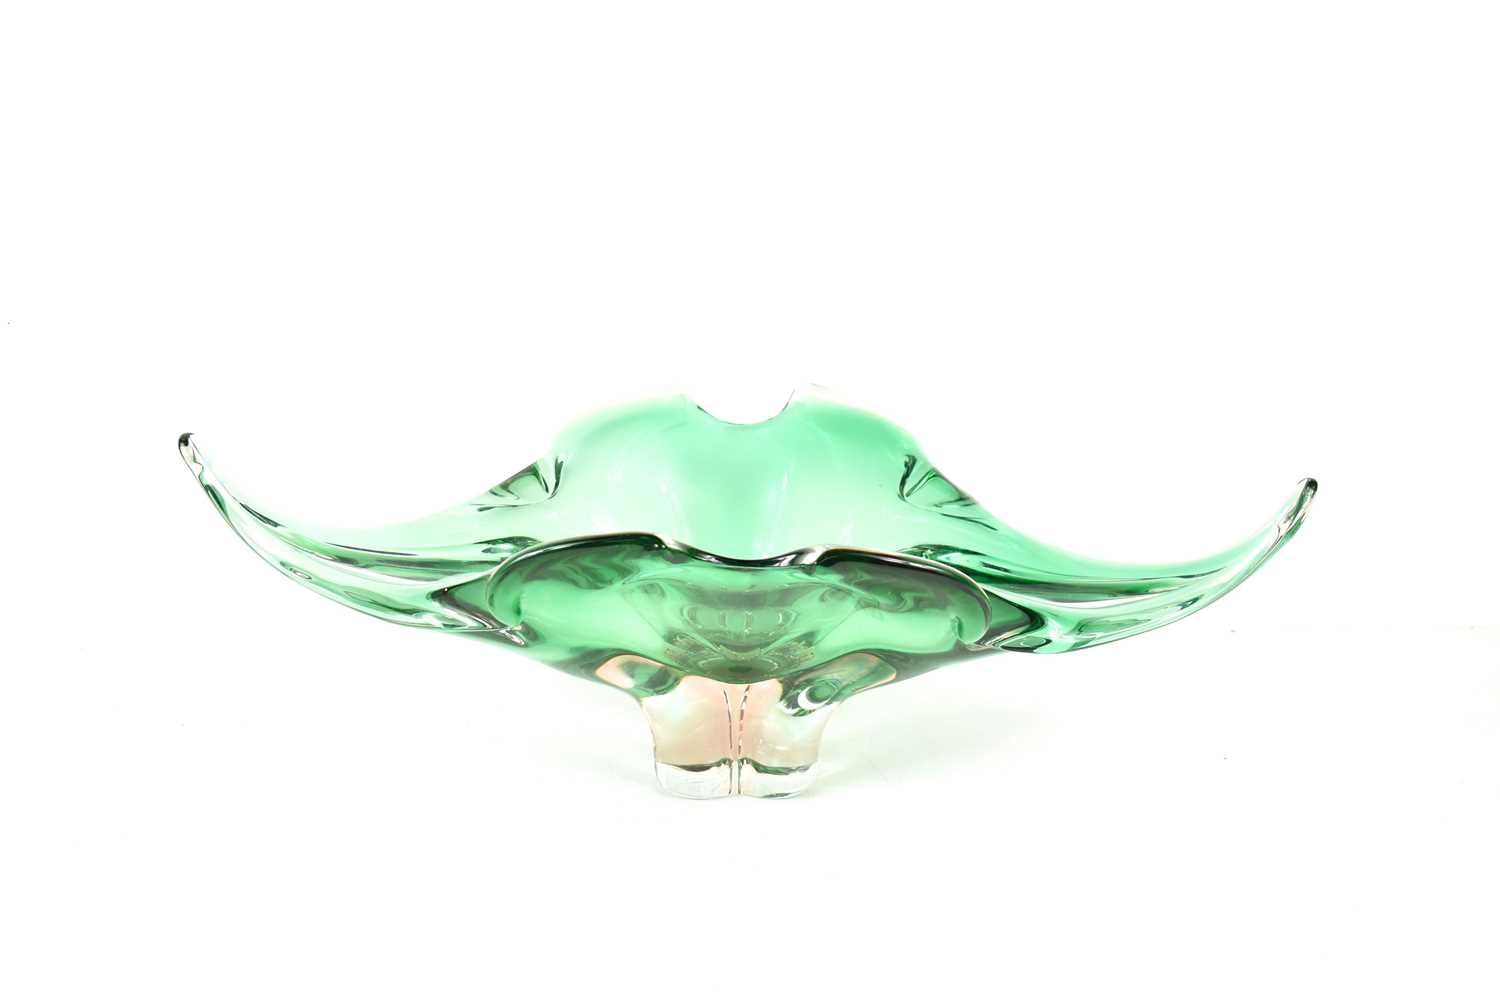 A Chribska Glass made in Czechoslovakia, and designed by Josef Hospodka green glass handkerchief